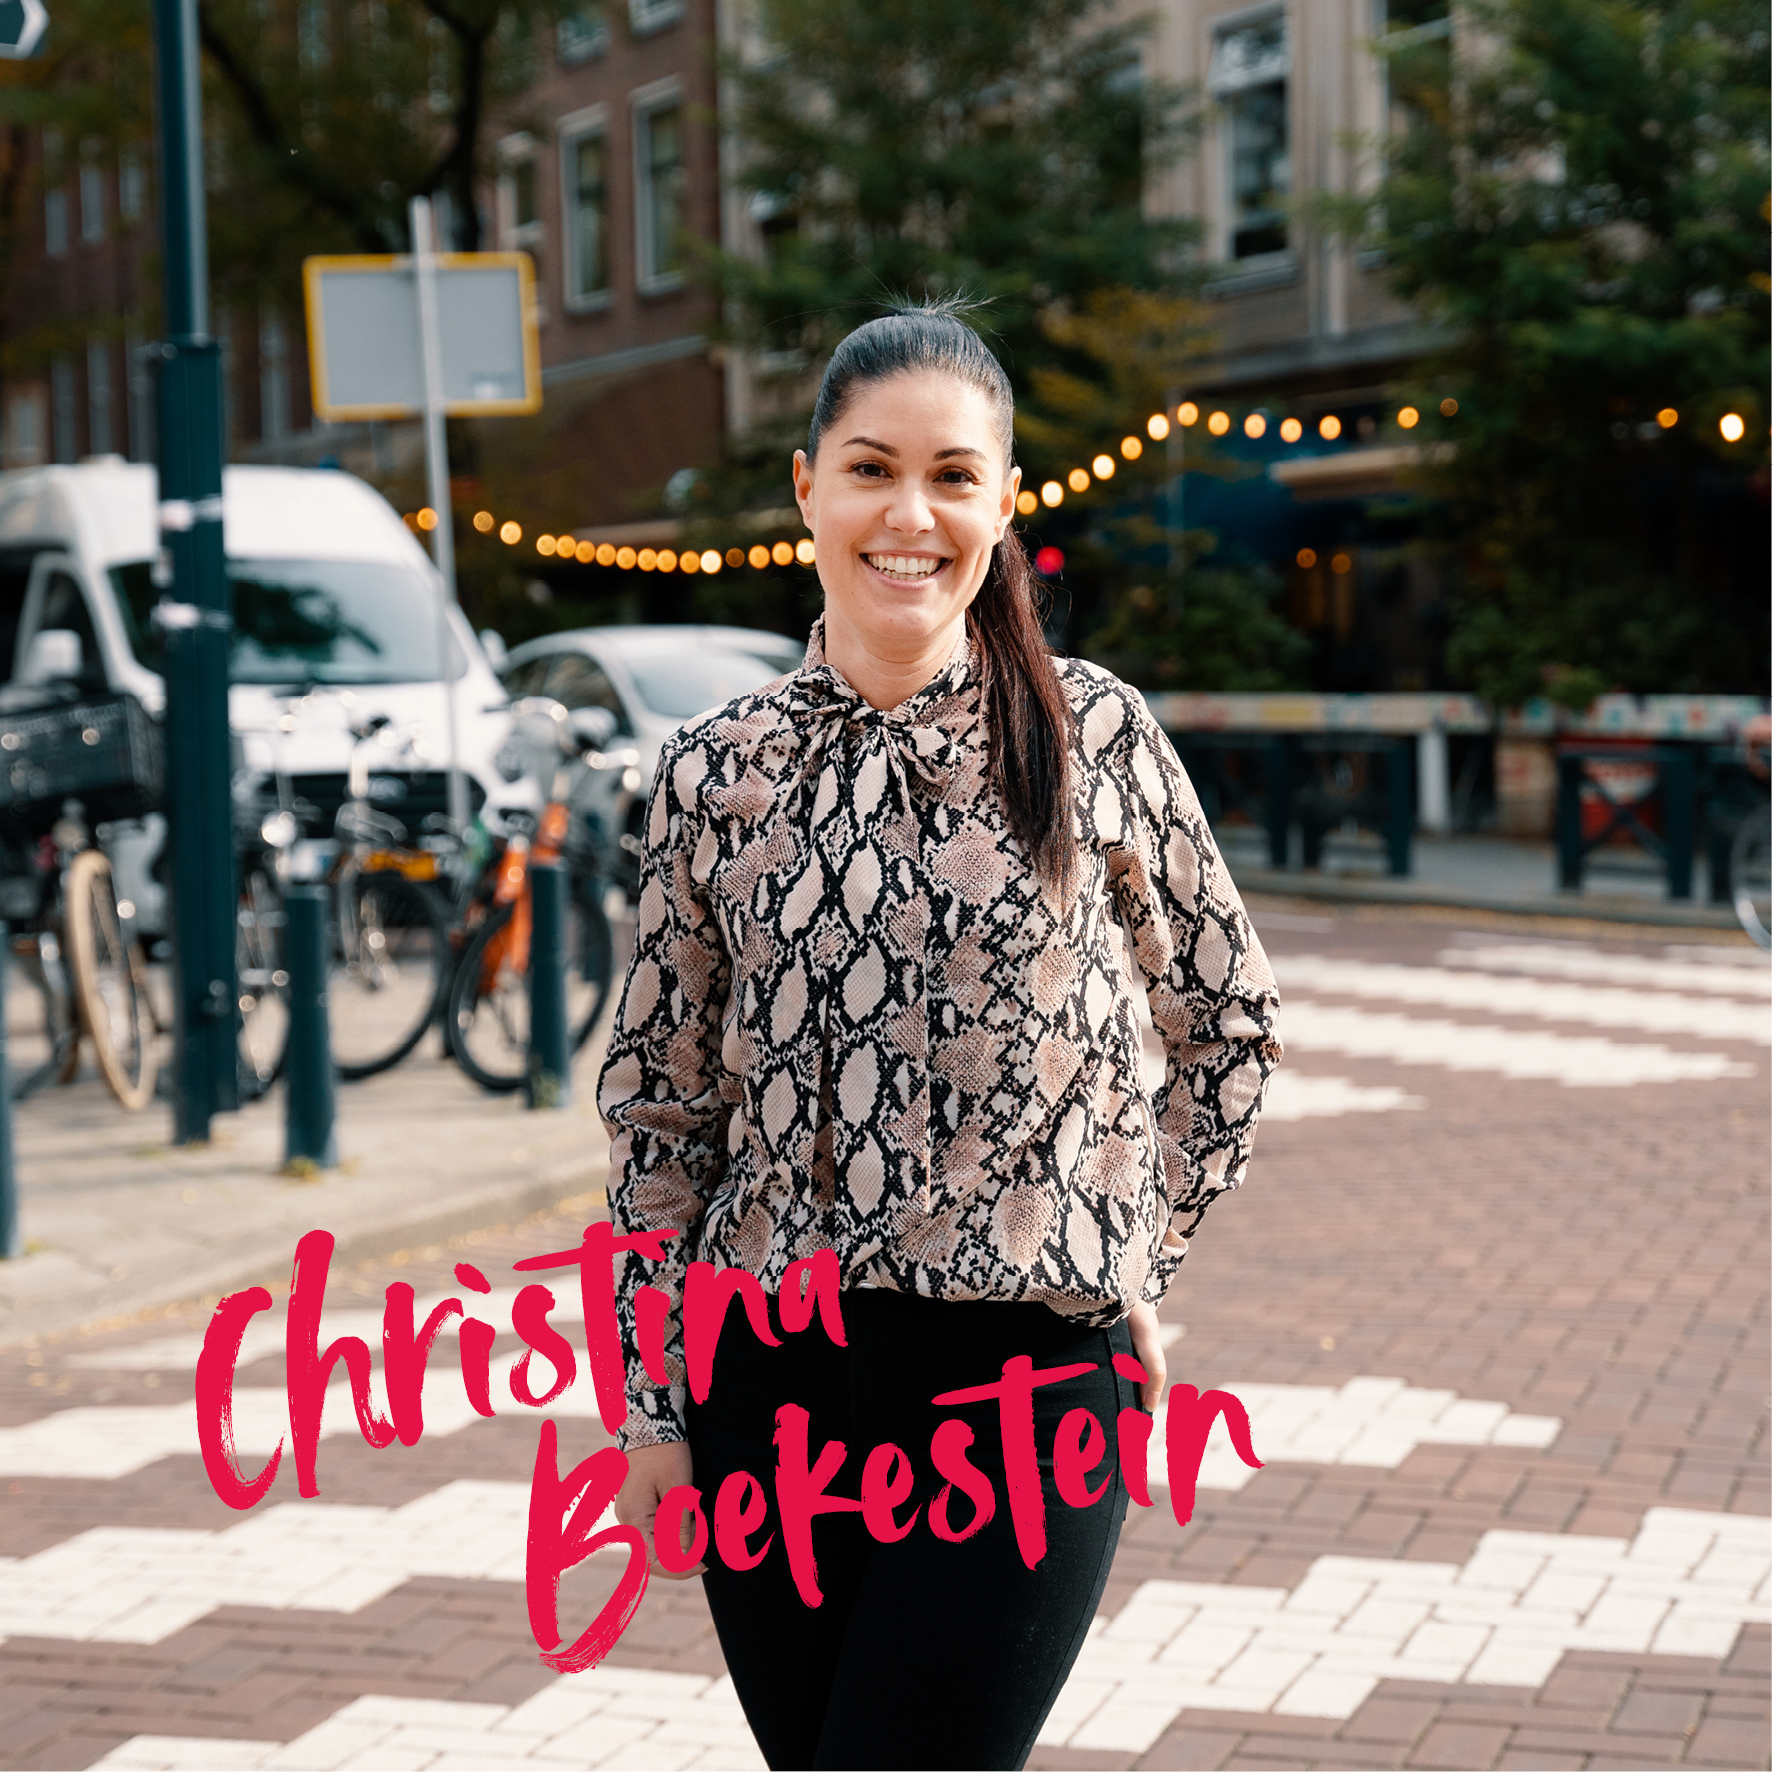 Meet Christina Boekestein